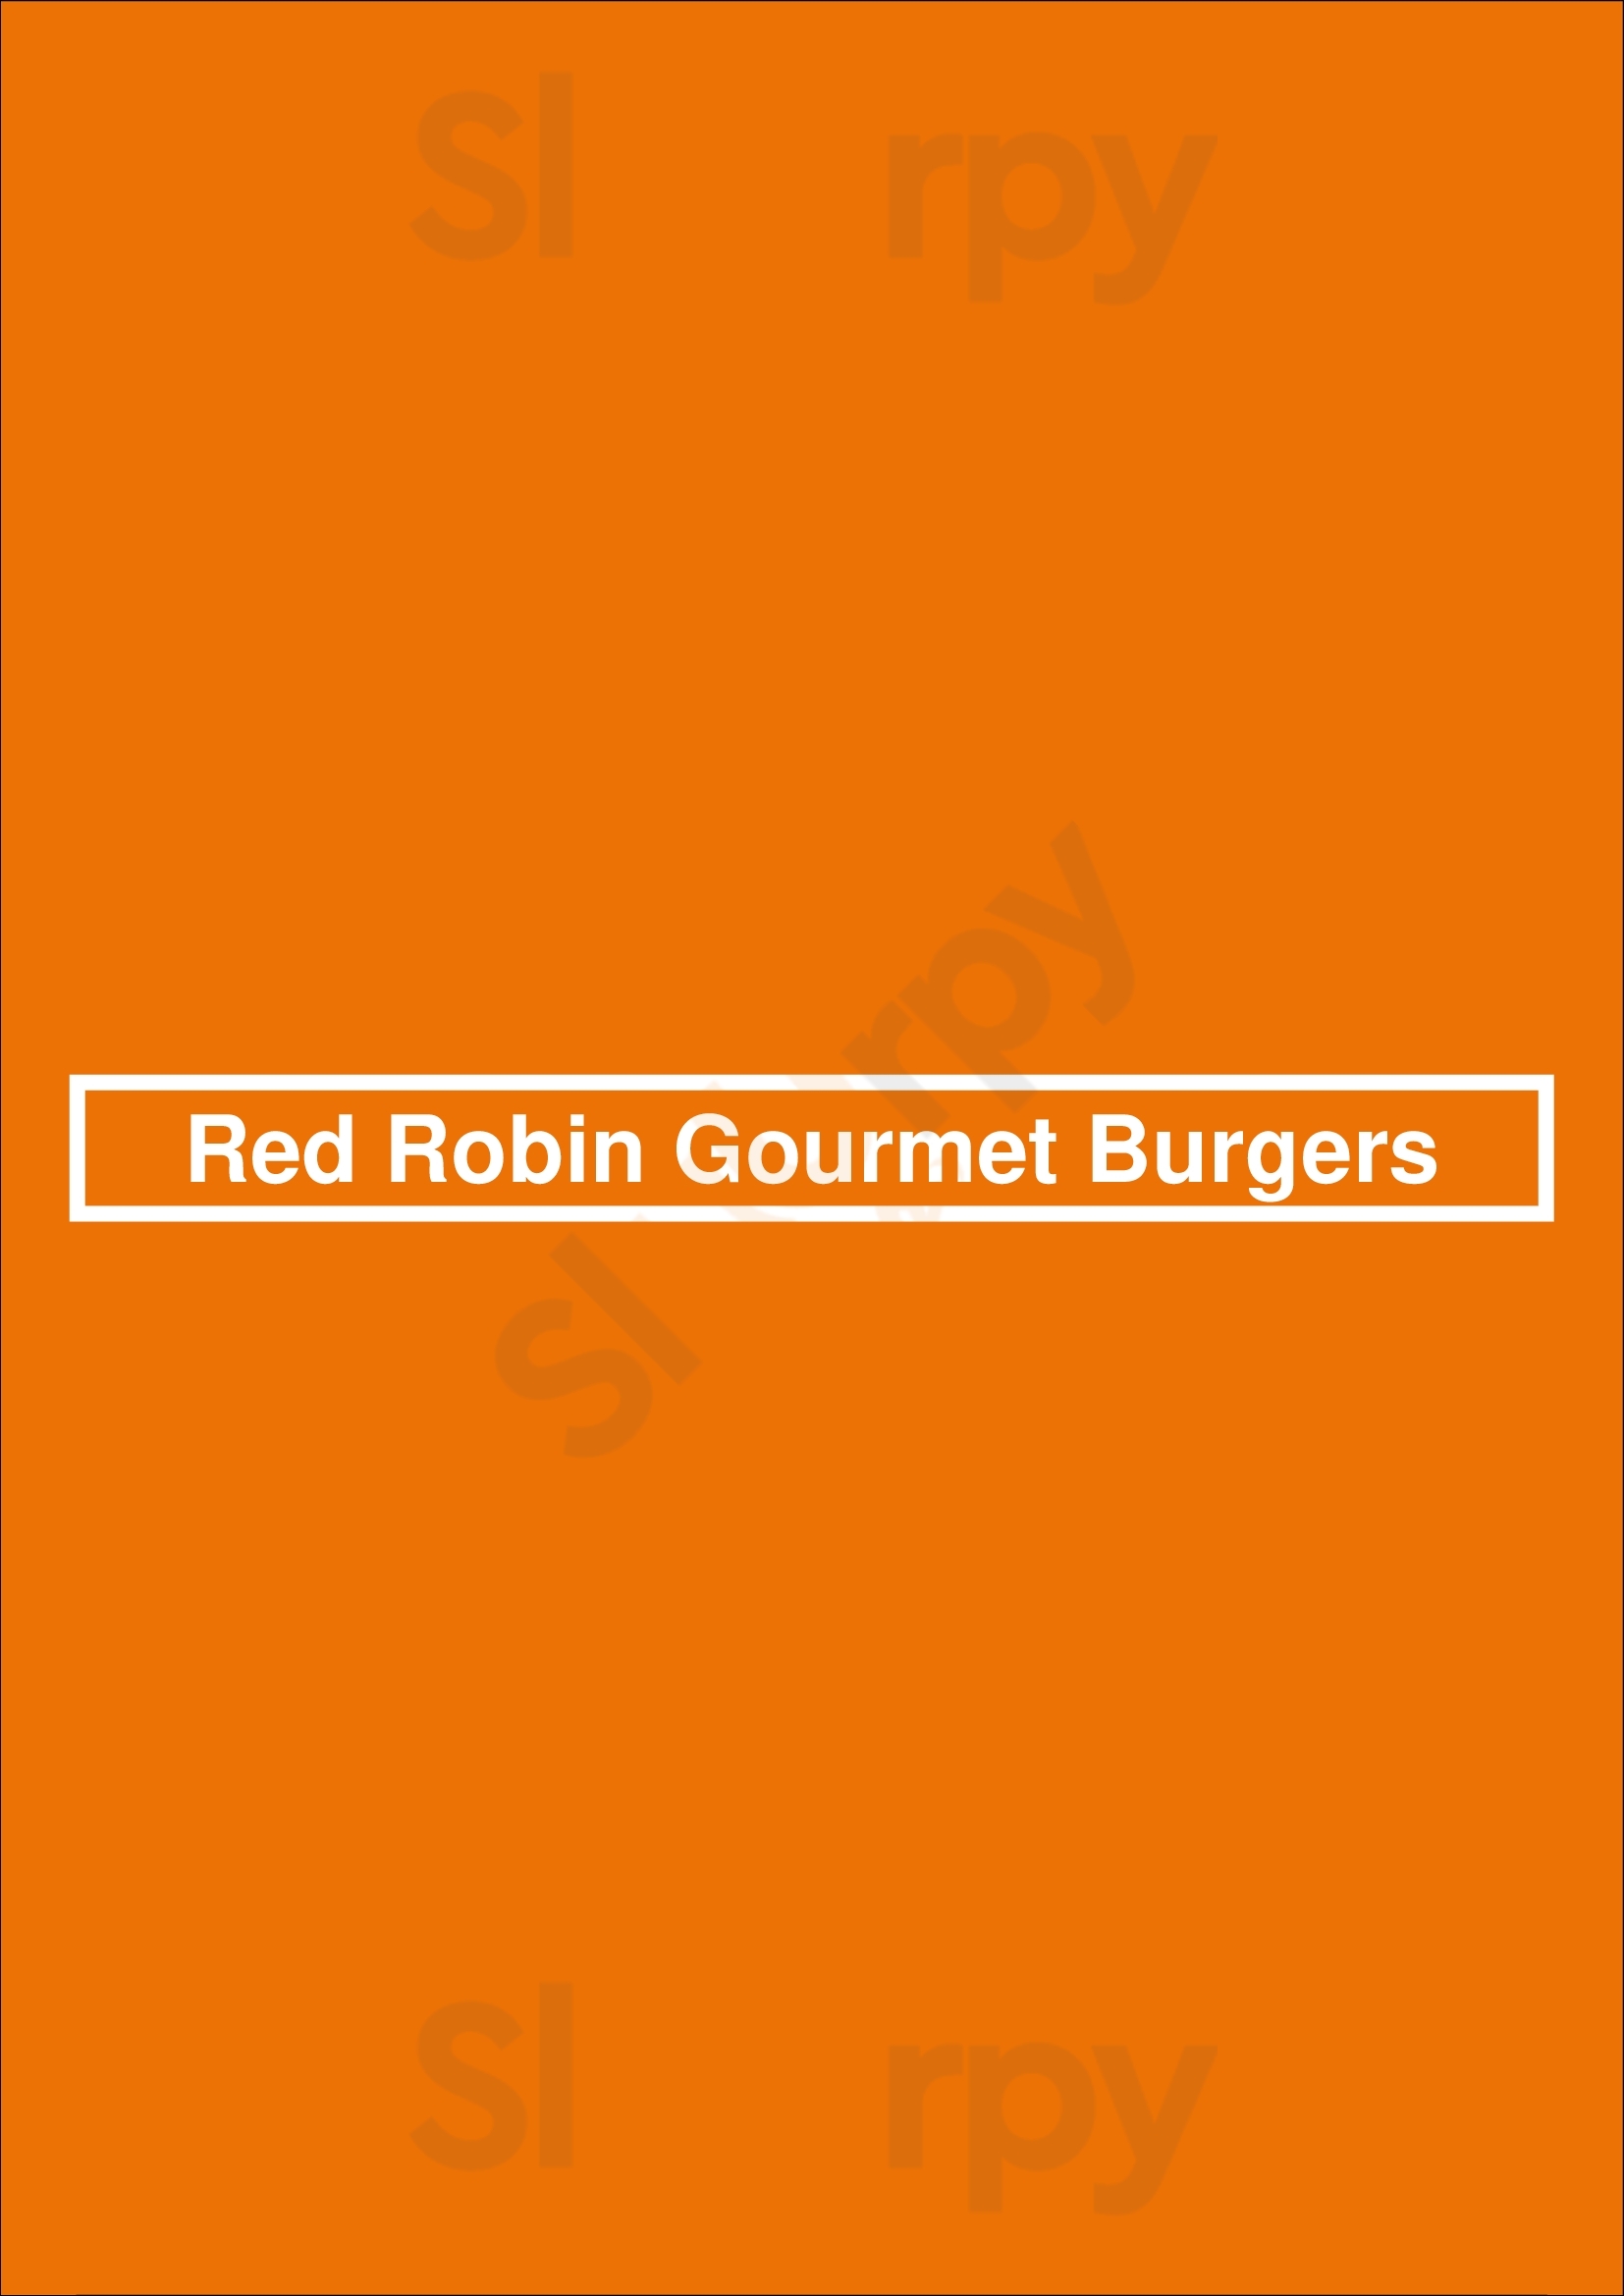 Red Robin Gourmet Burgers Mesa Menu - 1